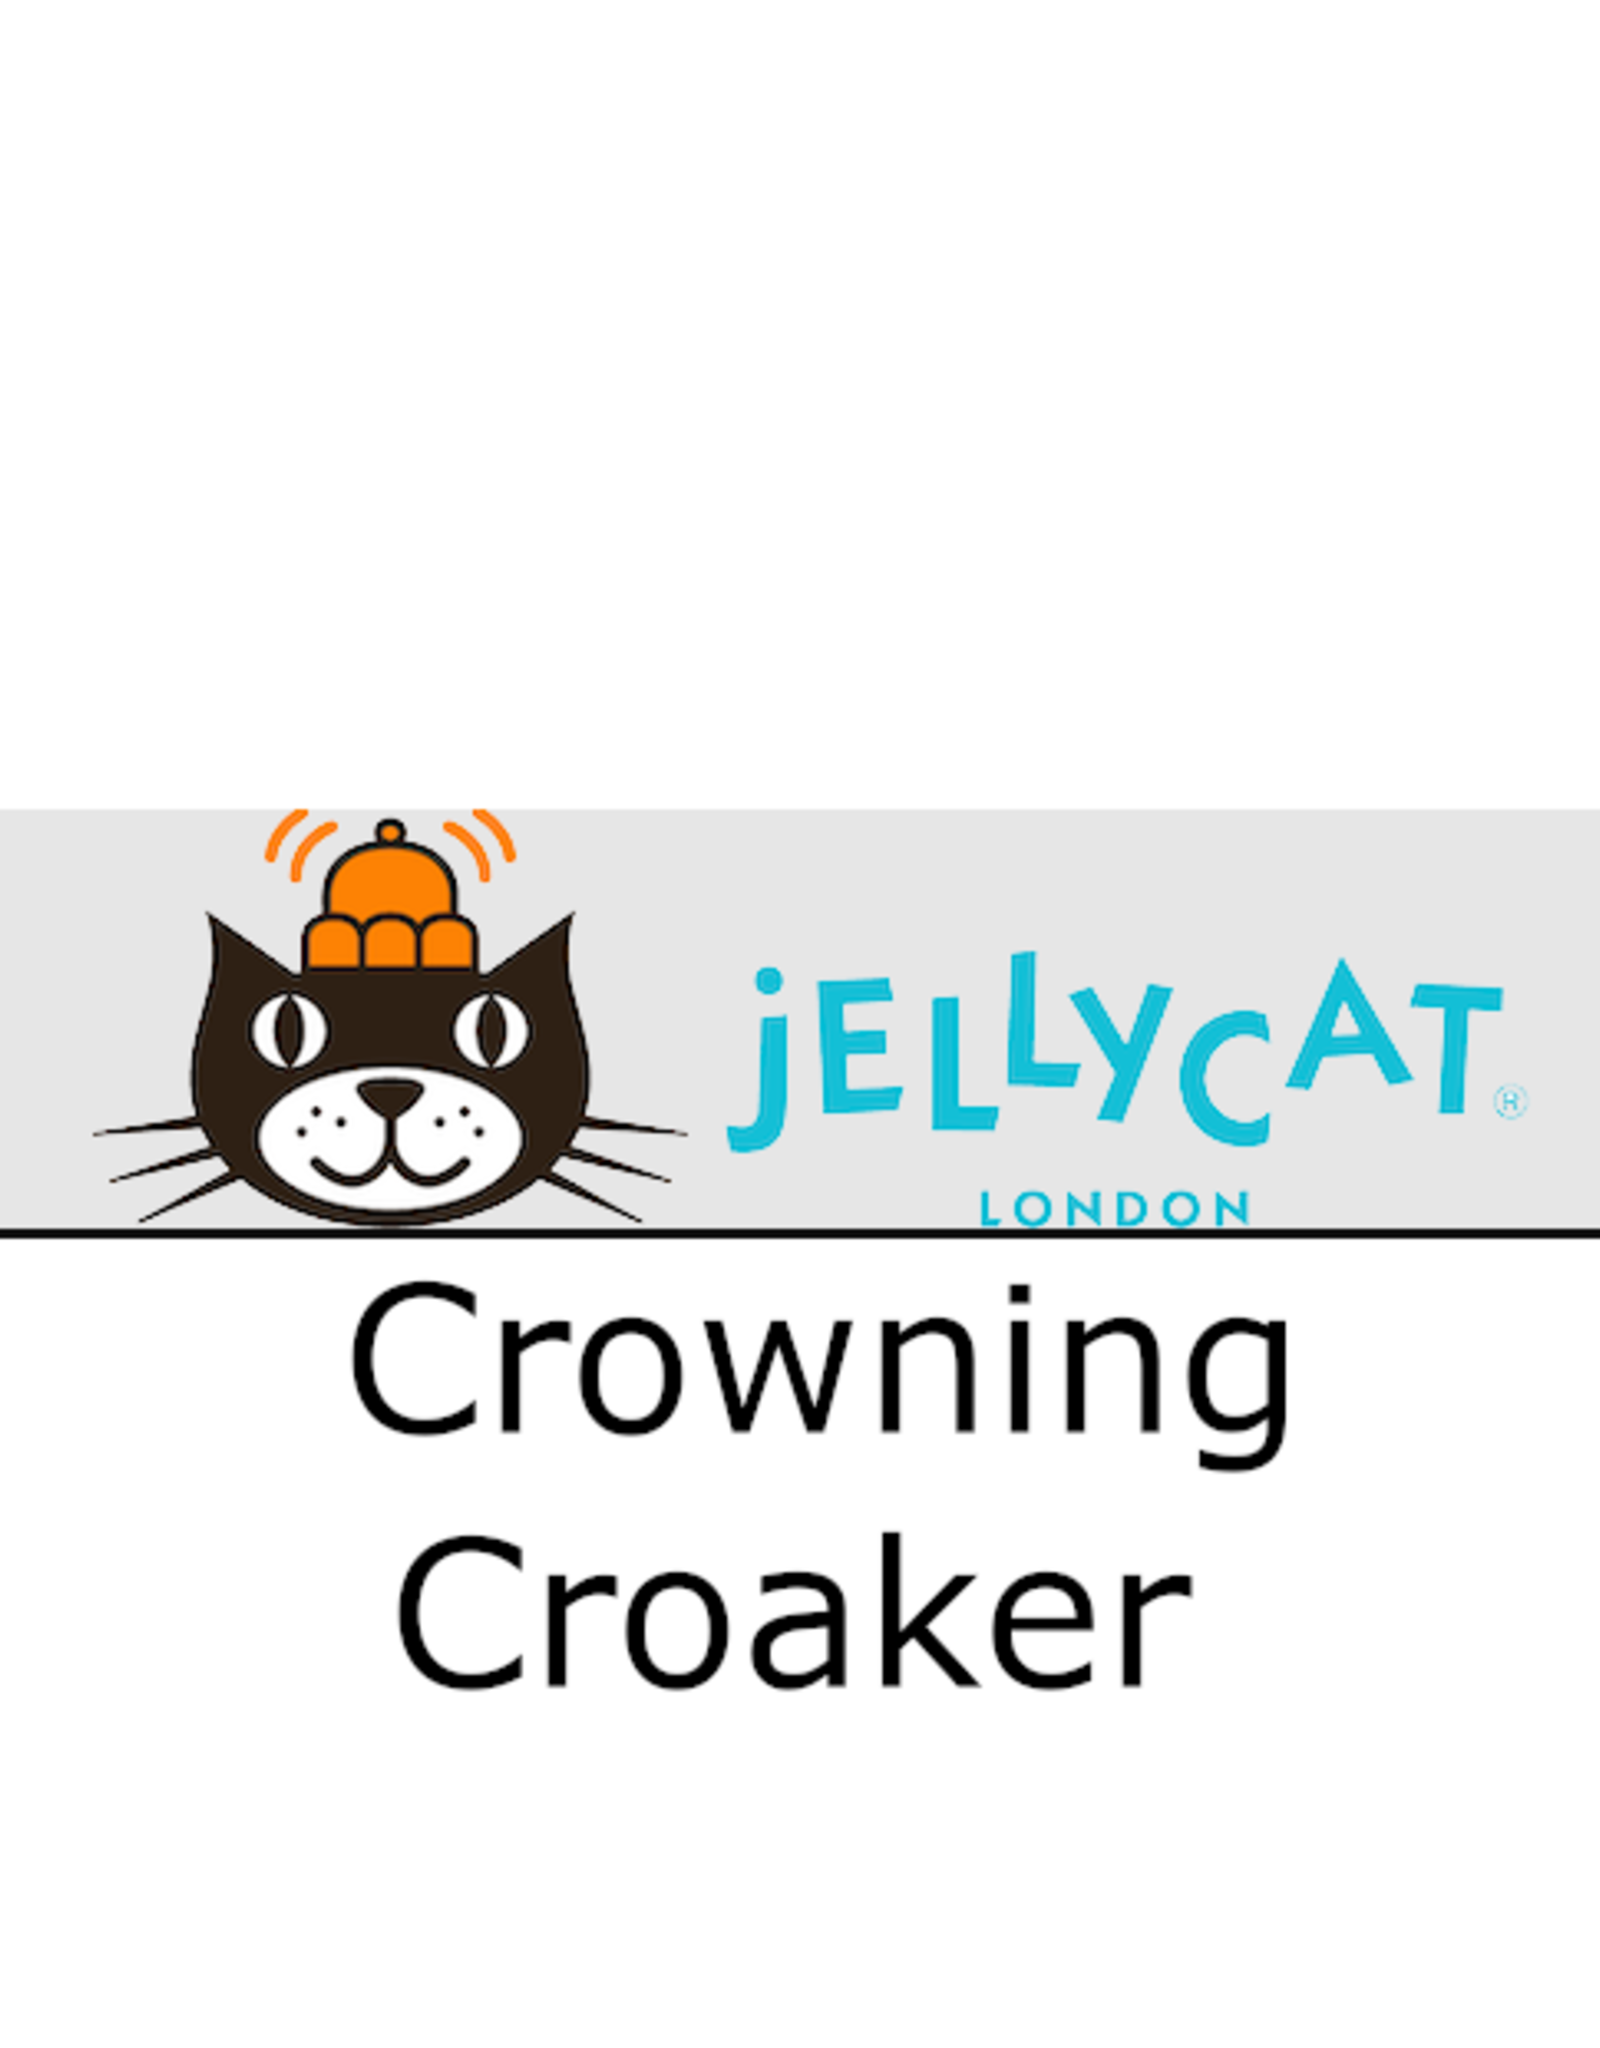 Jellycat Crowning Croaker